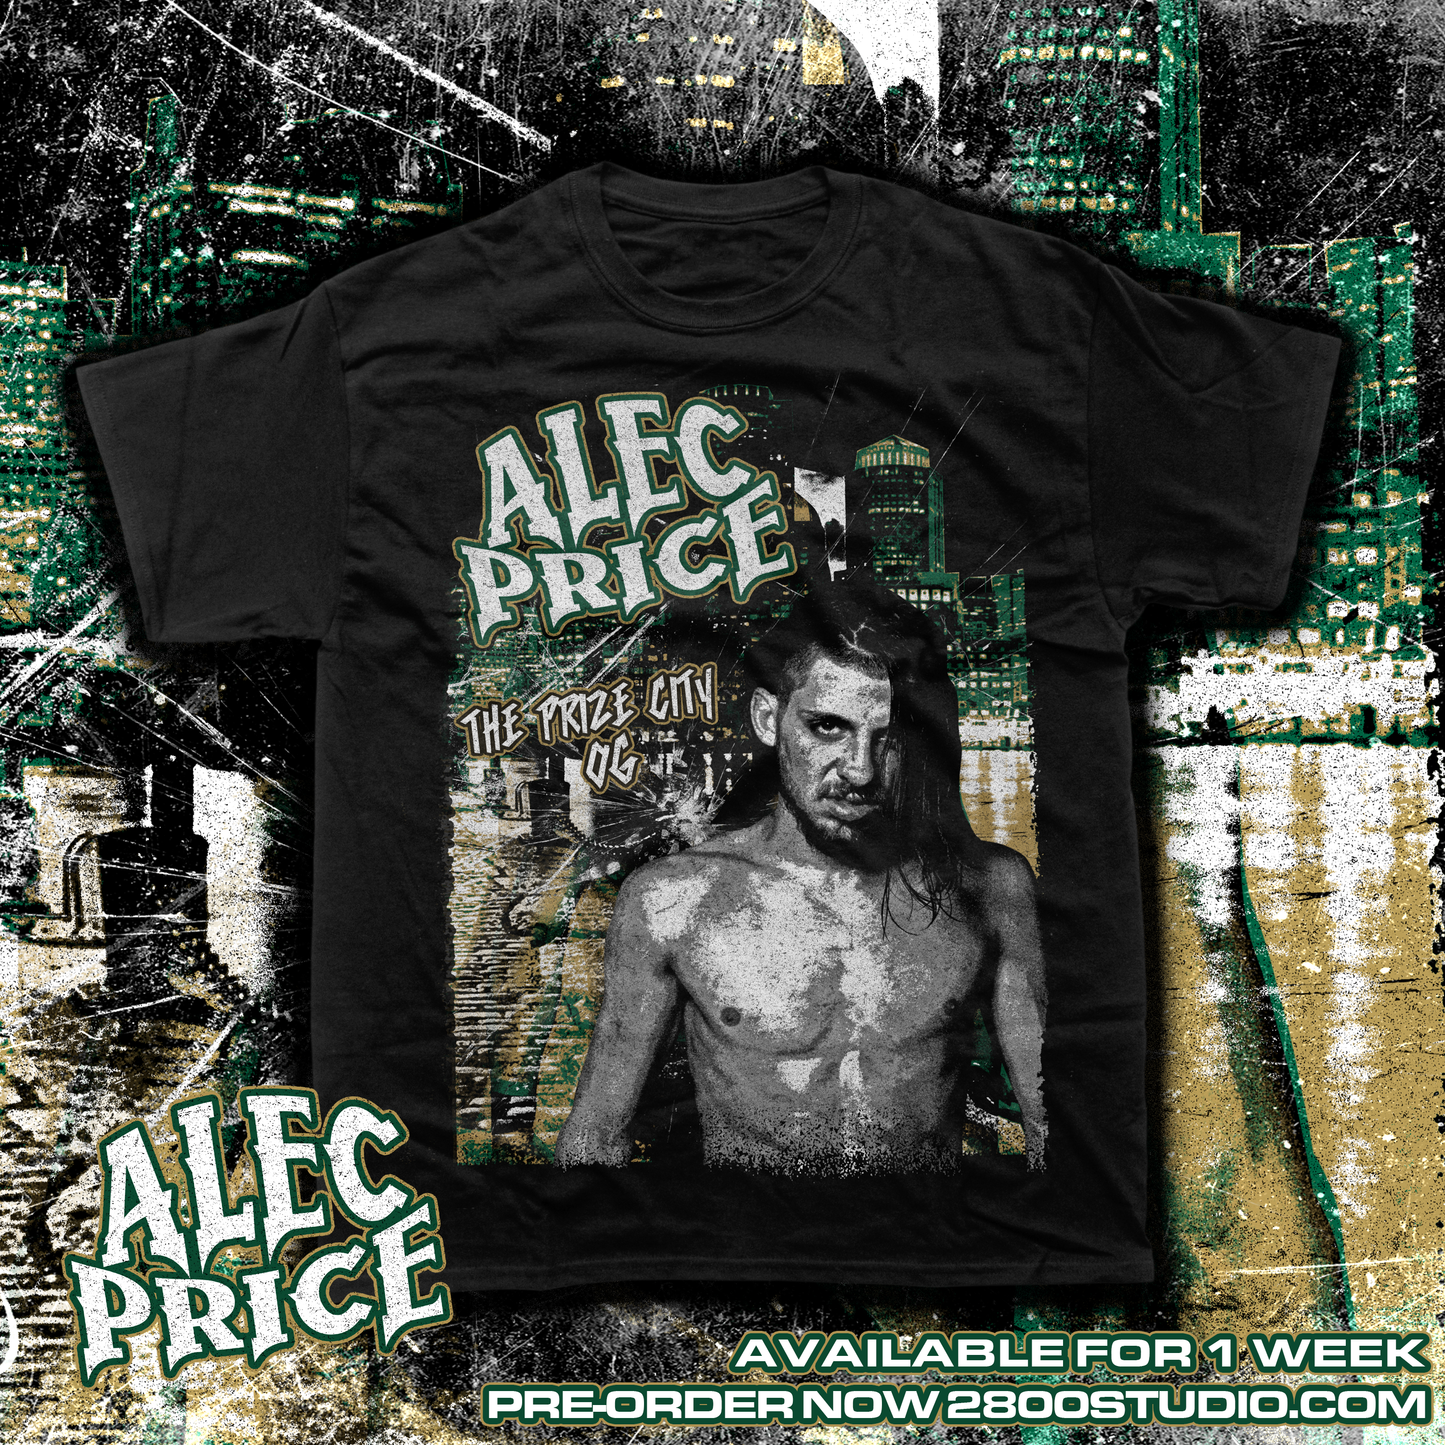 Alec Price "The Prize City OG" T-Shirt